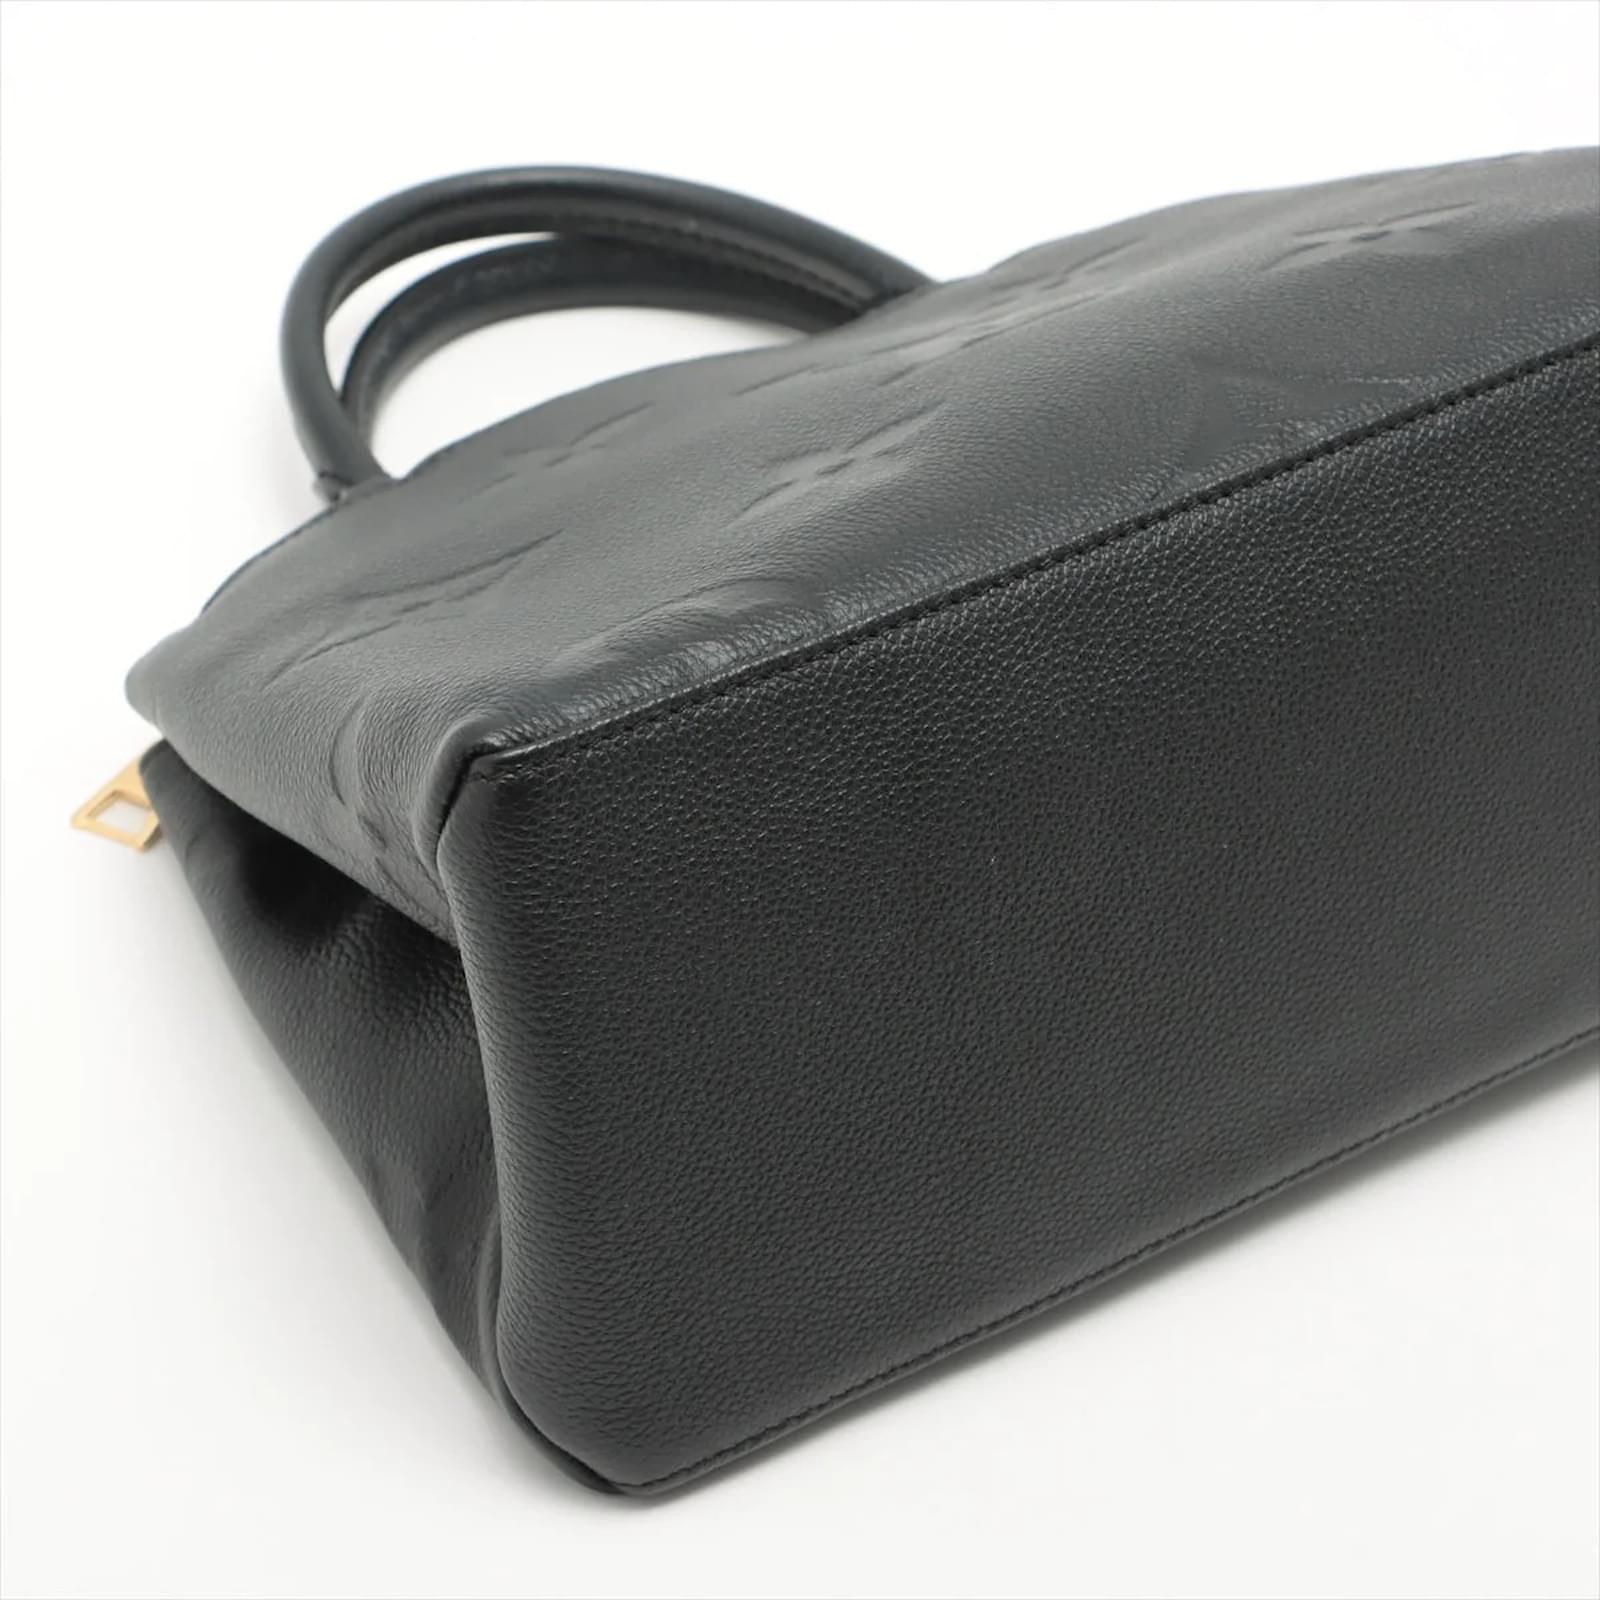 Petit Palais Monogram Empreinte Leather - Women - Handbags